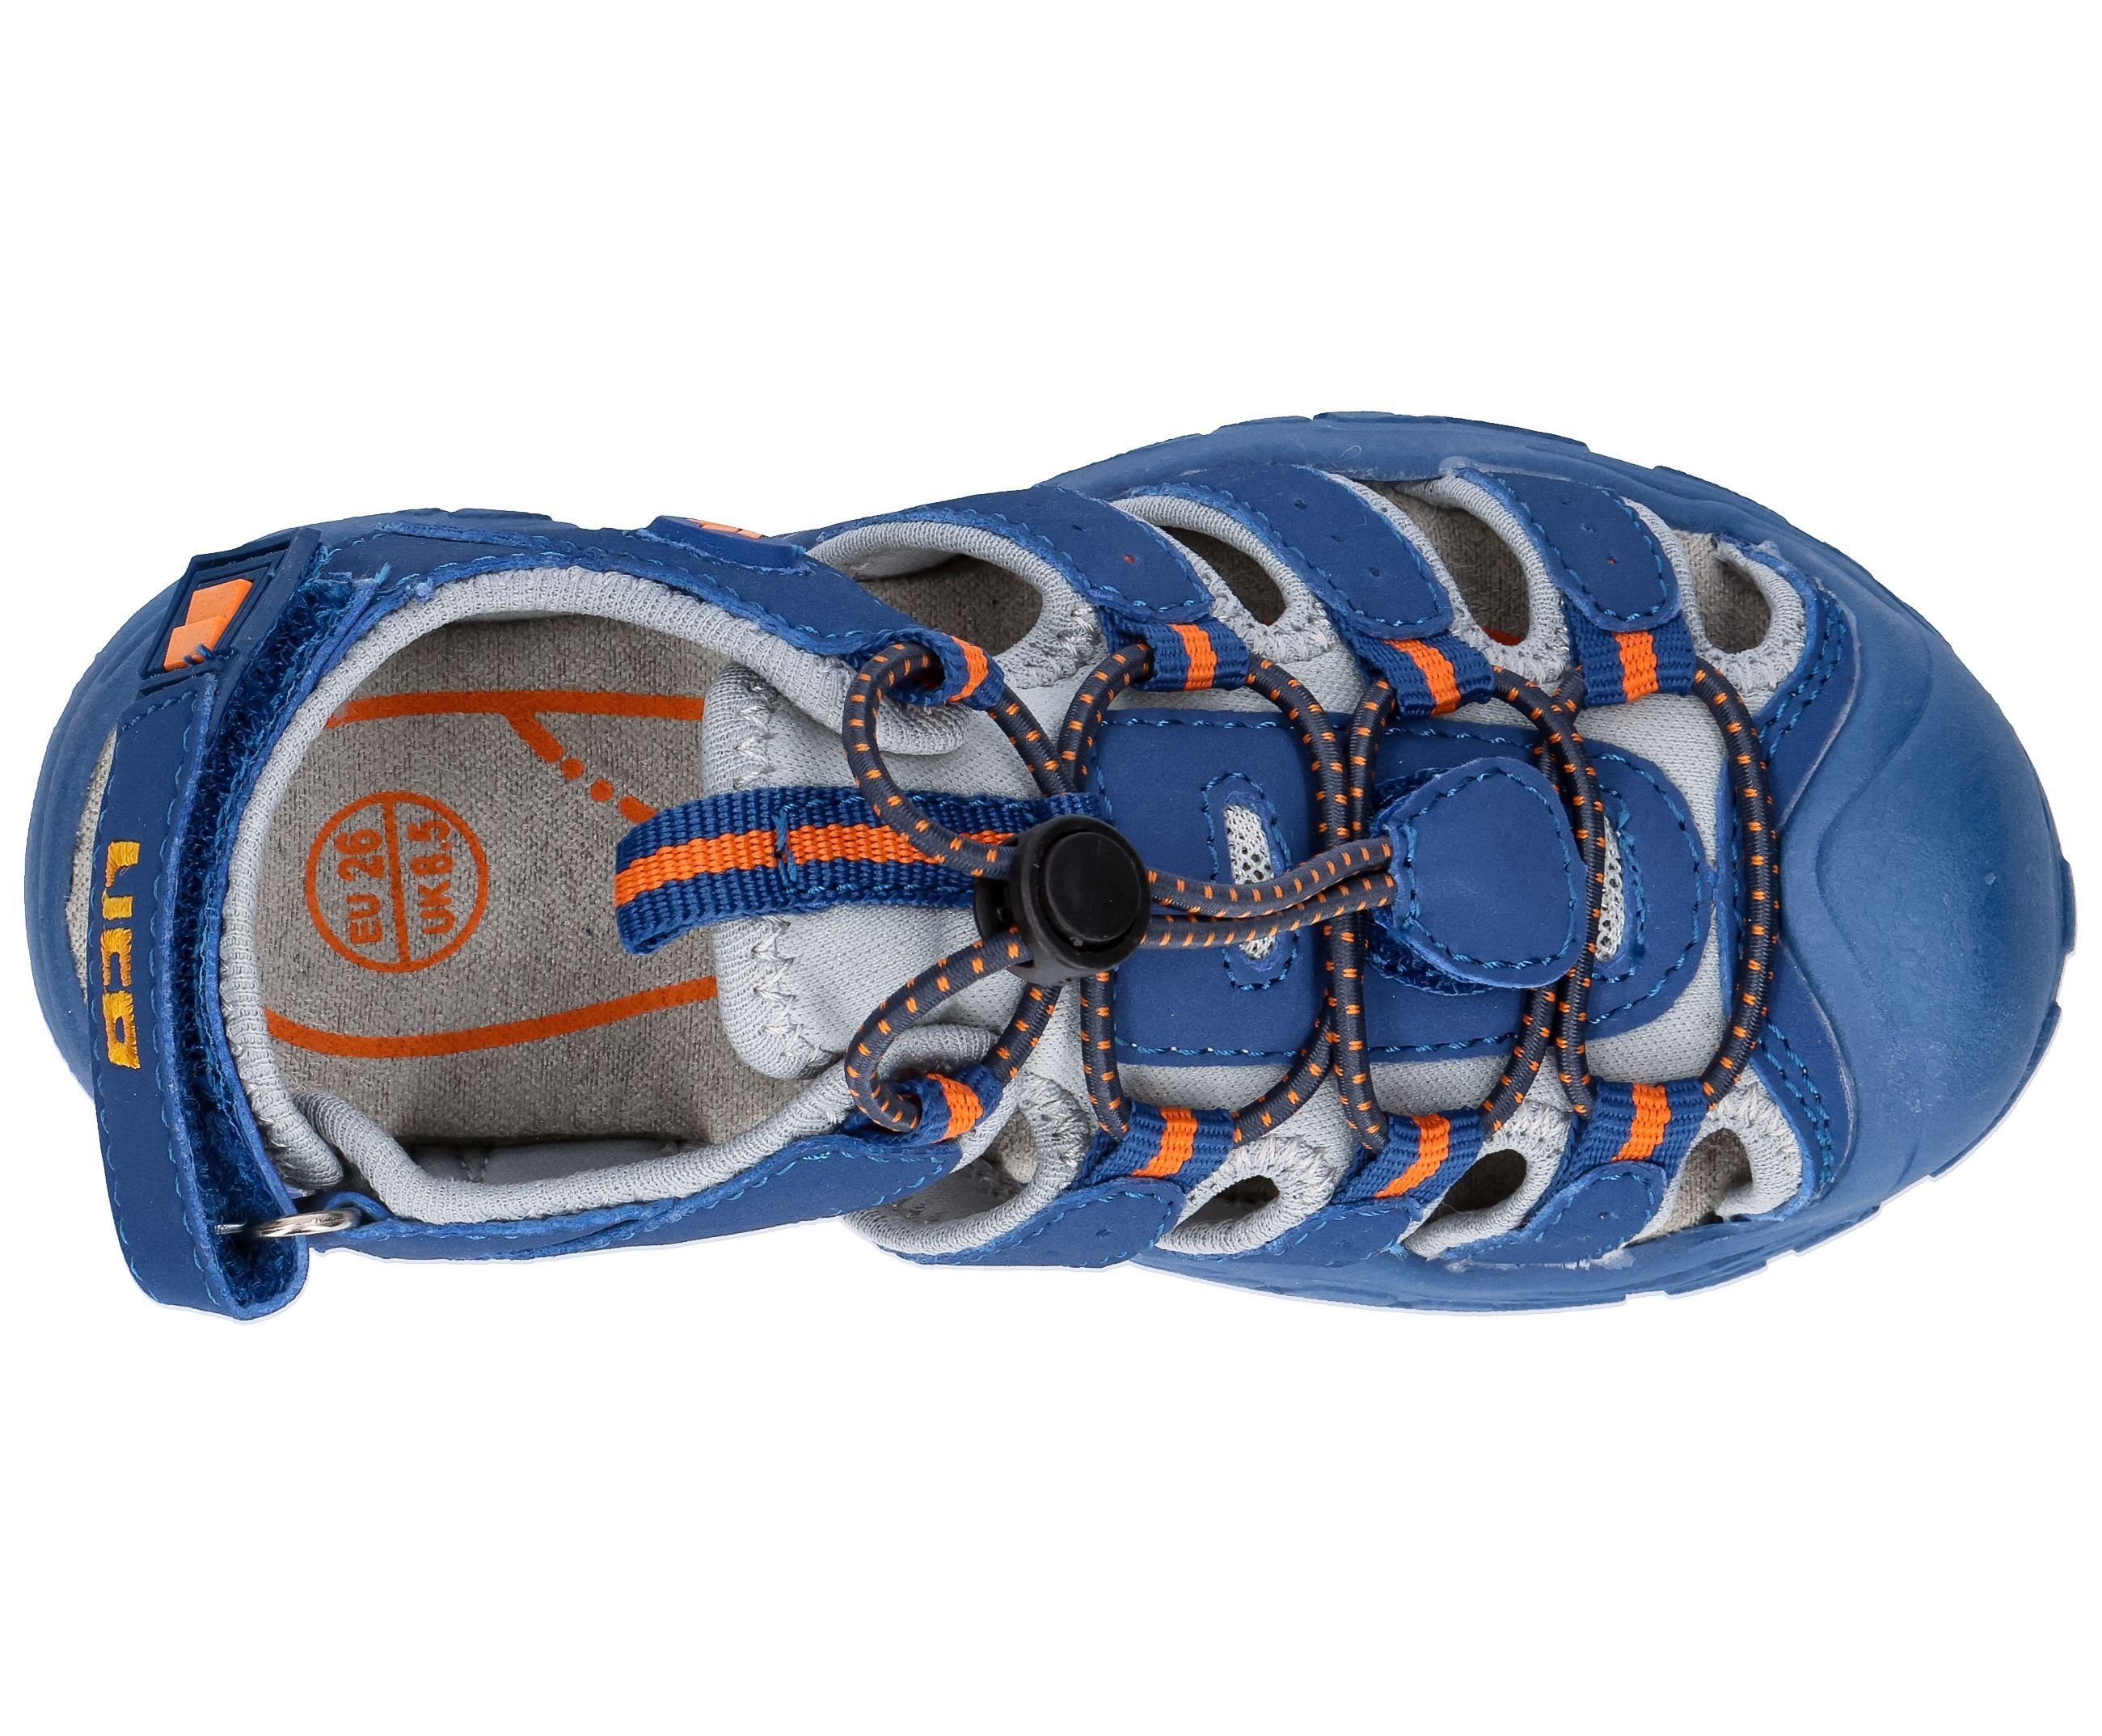 Sandale Sandale Lico blau/grau/orange Nimbo